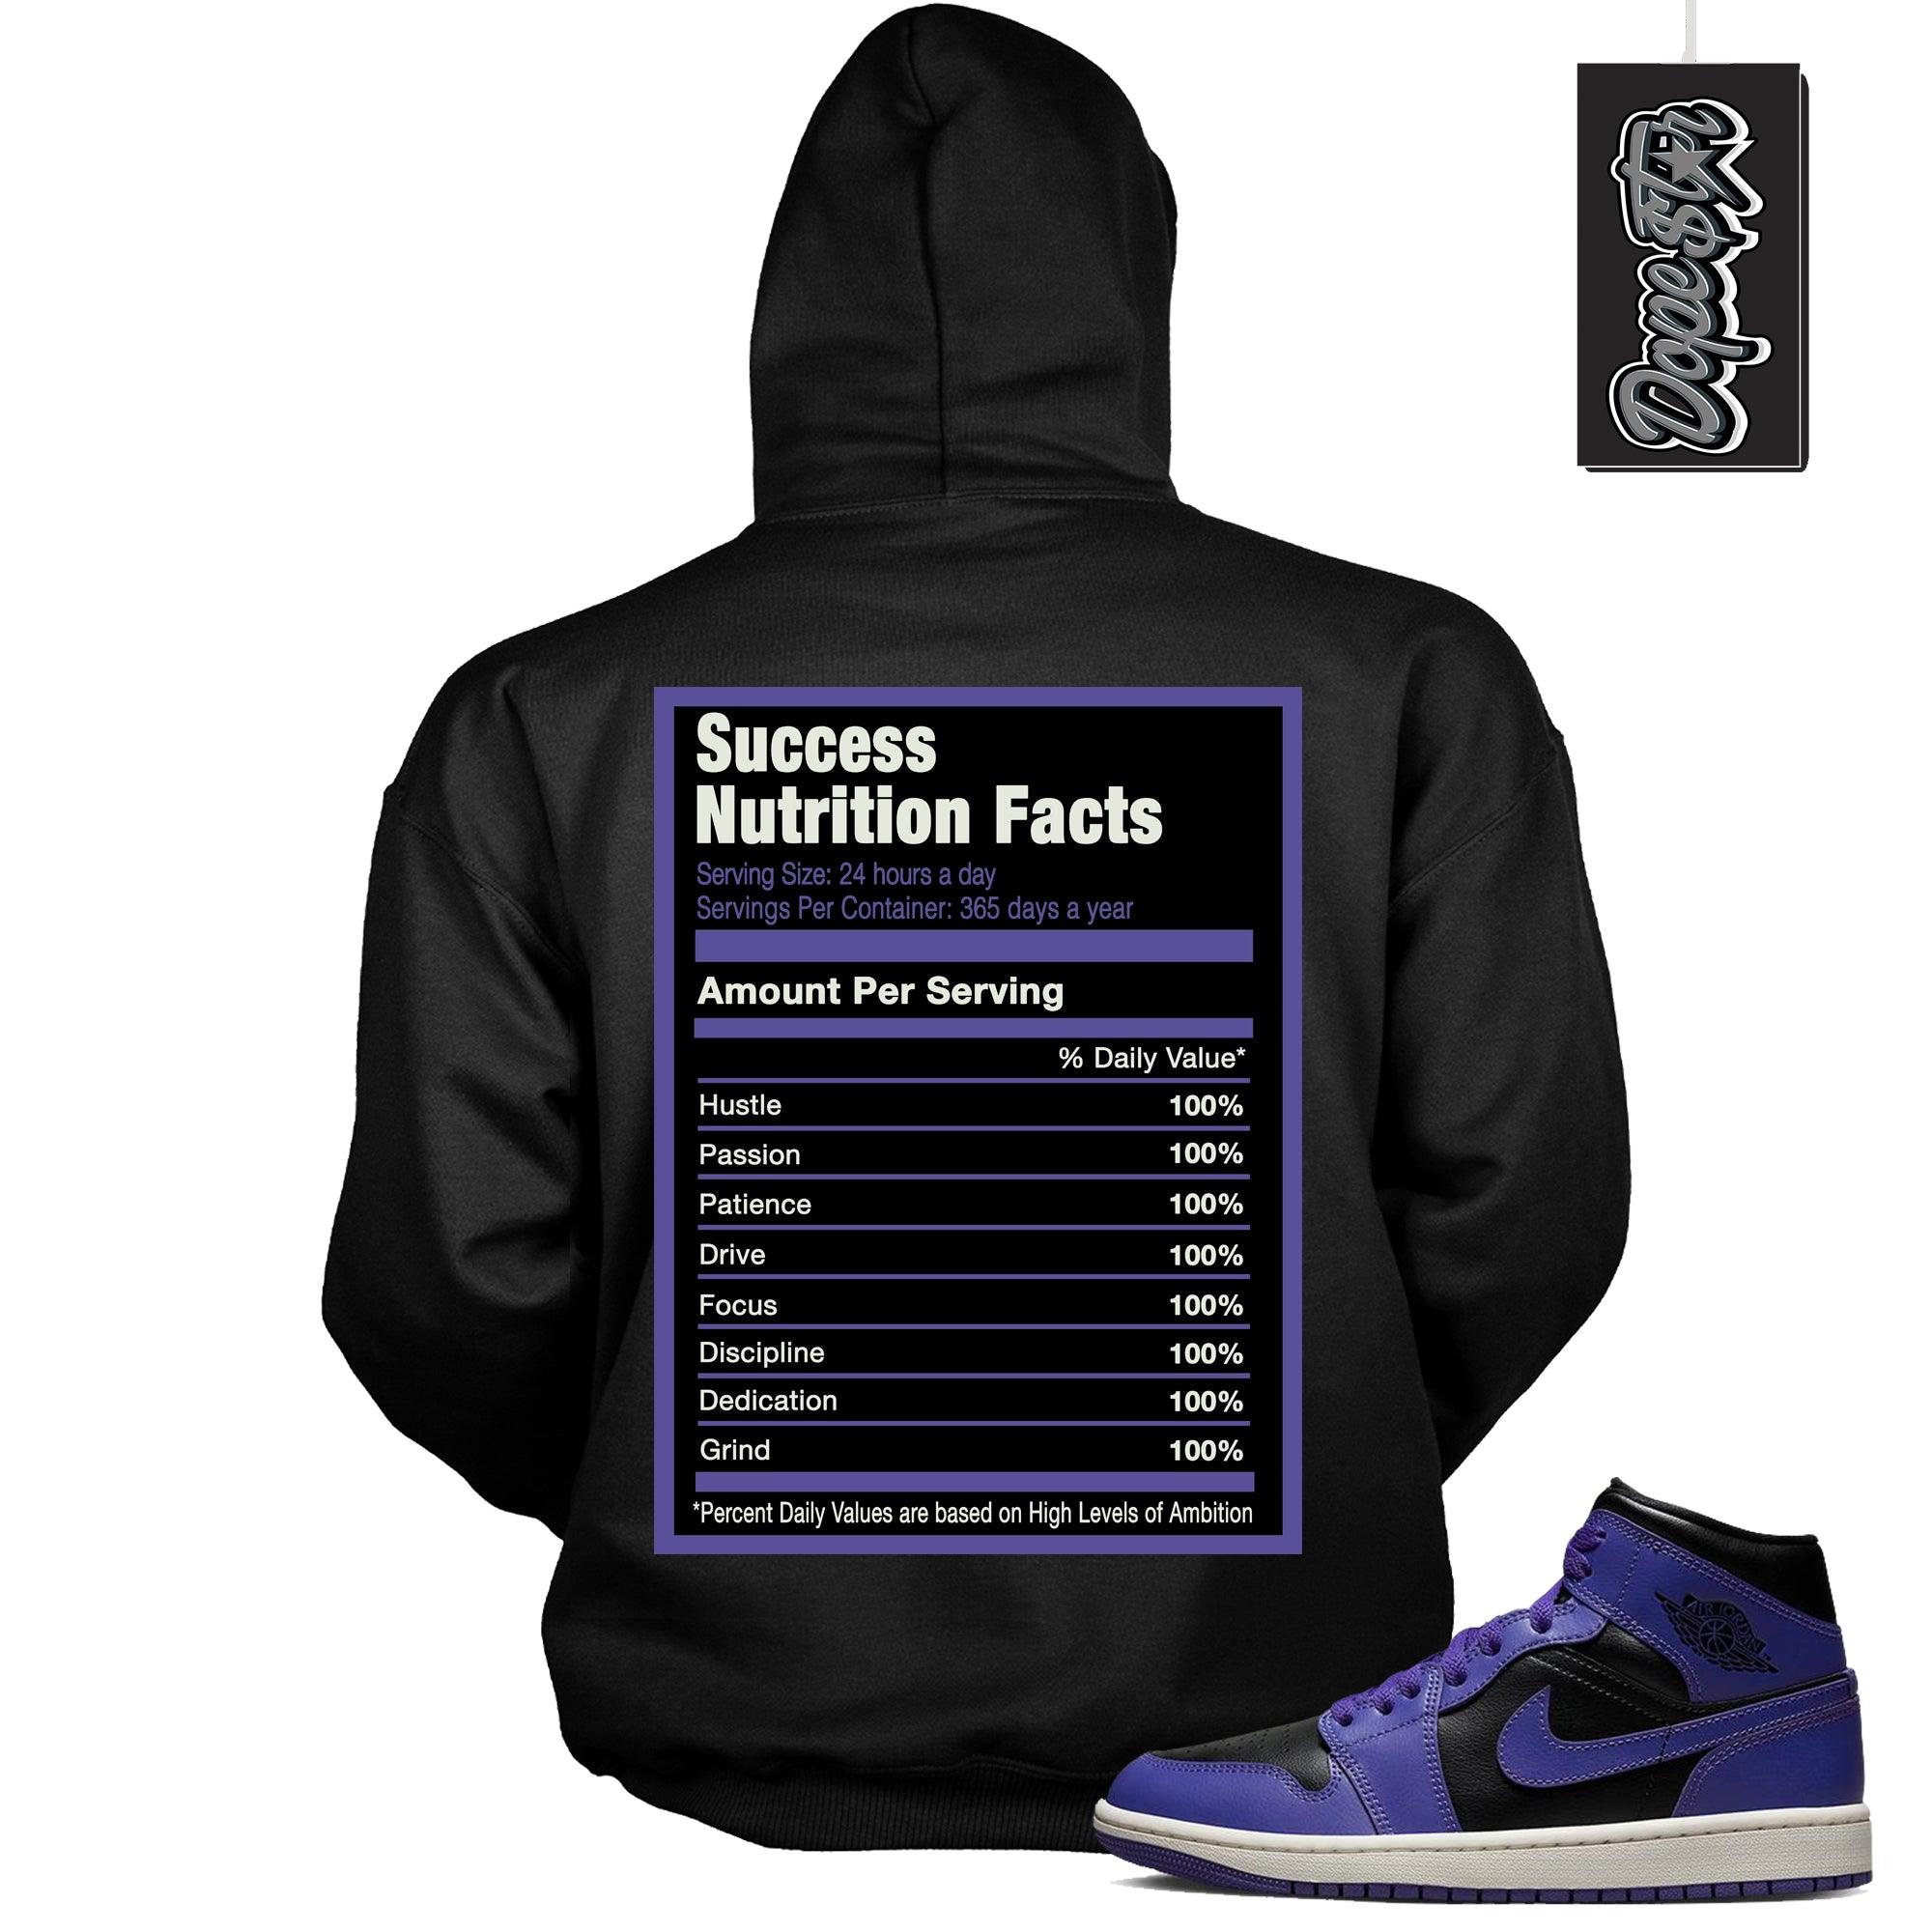 Success Nutrition Sneaker Sweatshirt AJ 1 Mid Purple Black photo